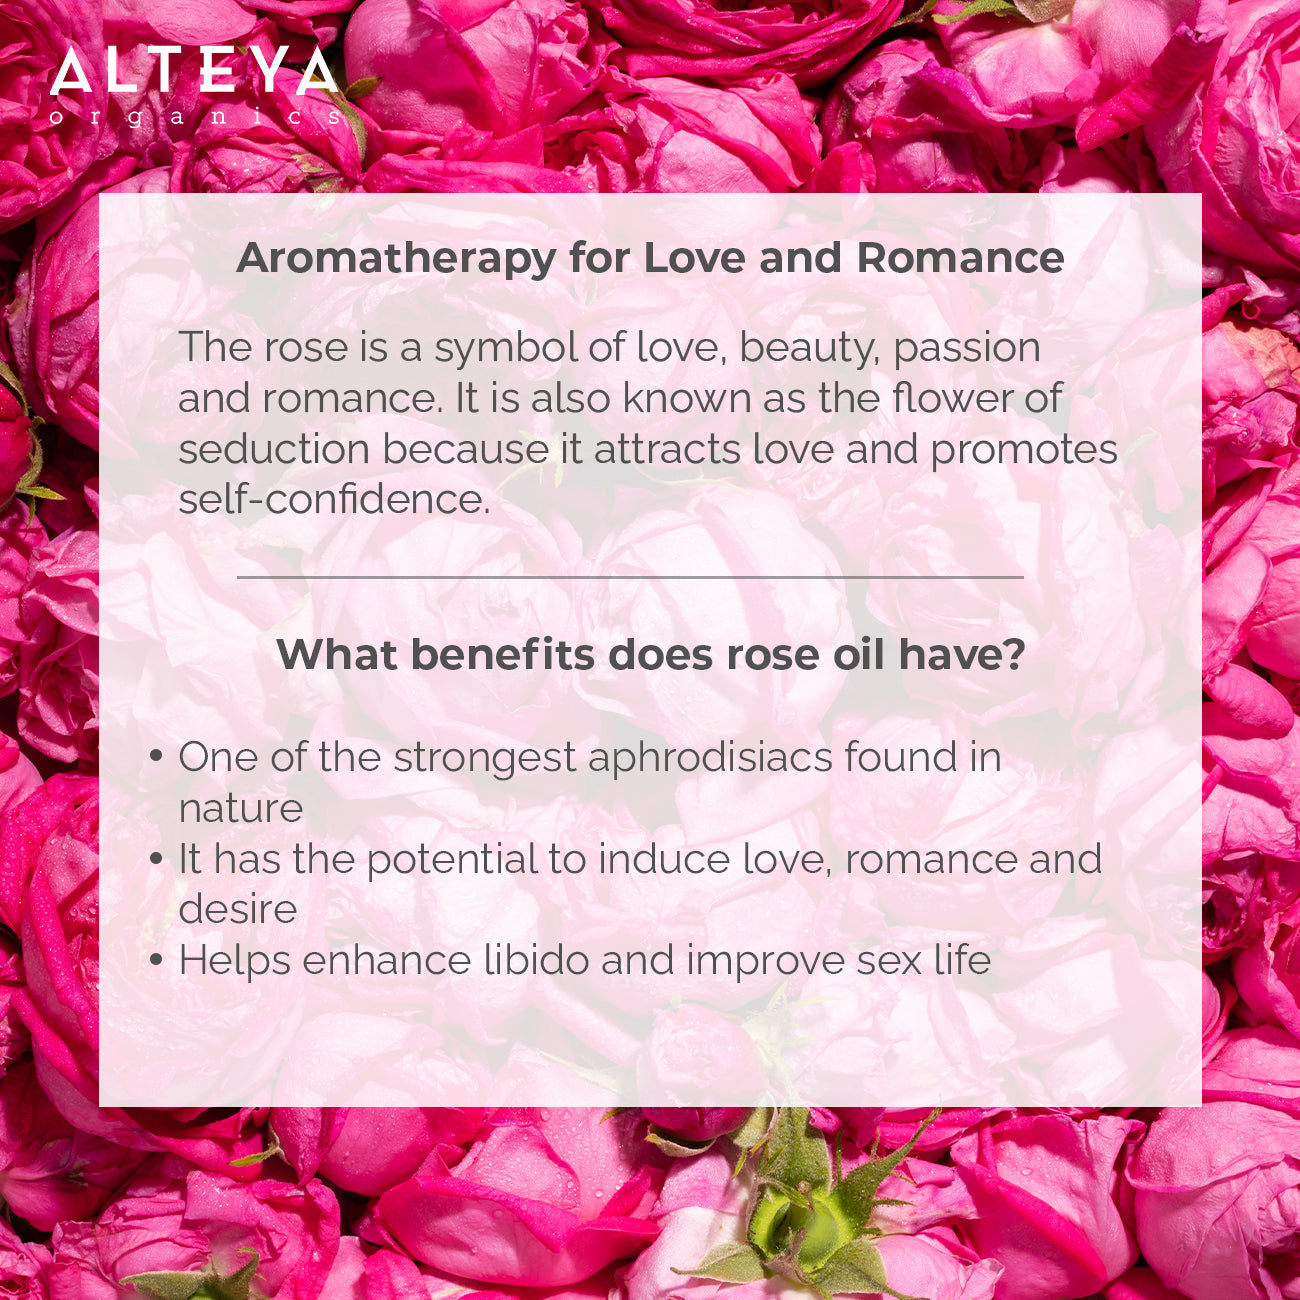 Alteya-organics-rose-oil-aromatherapy-for-love